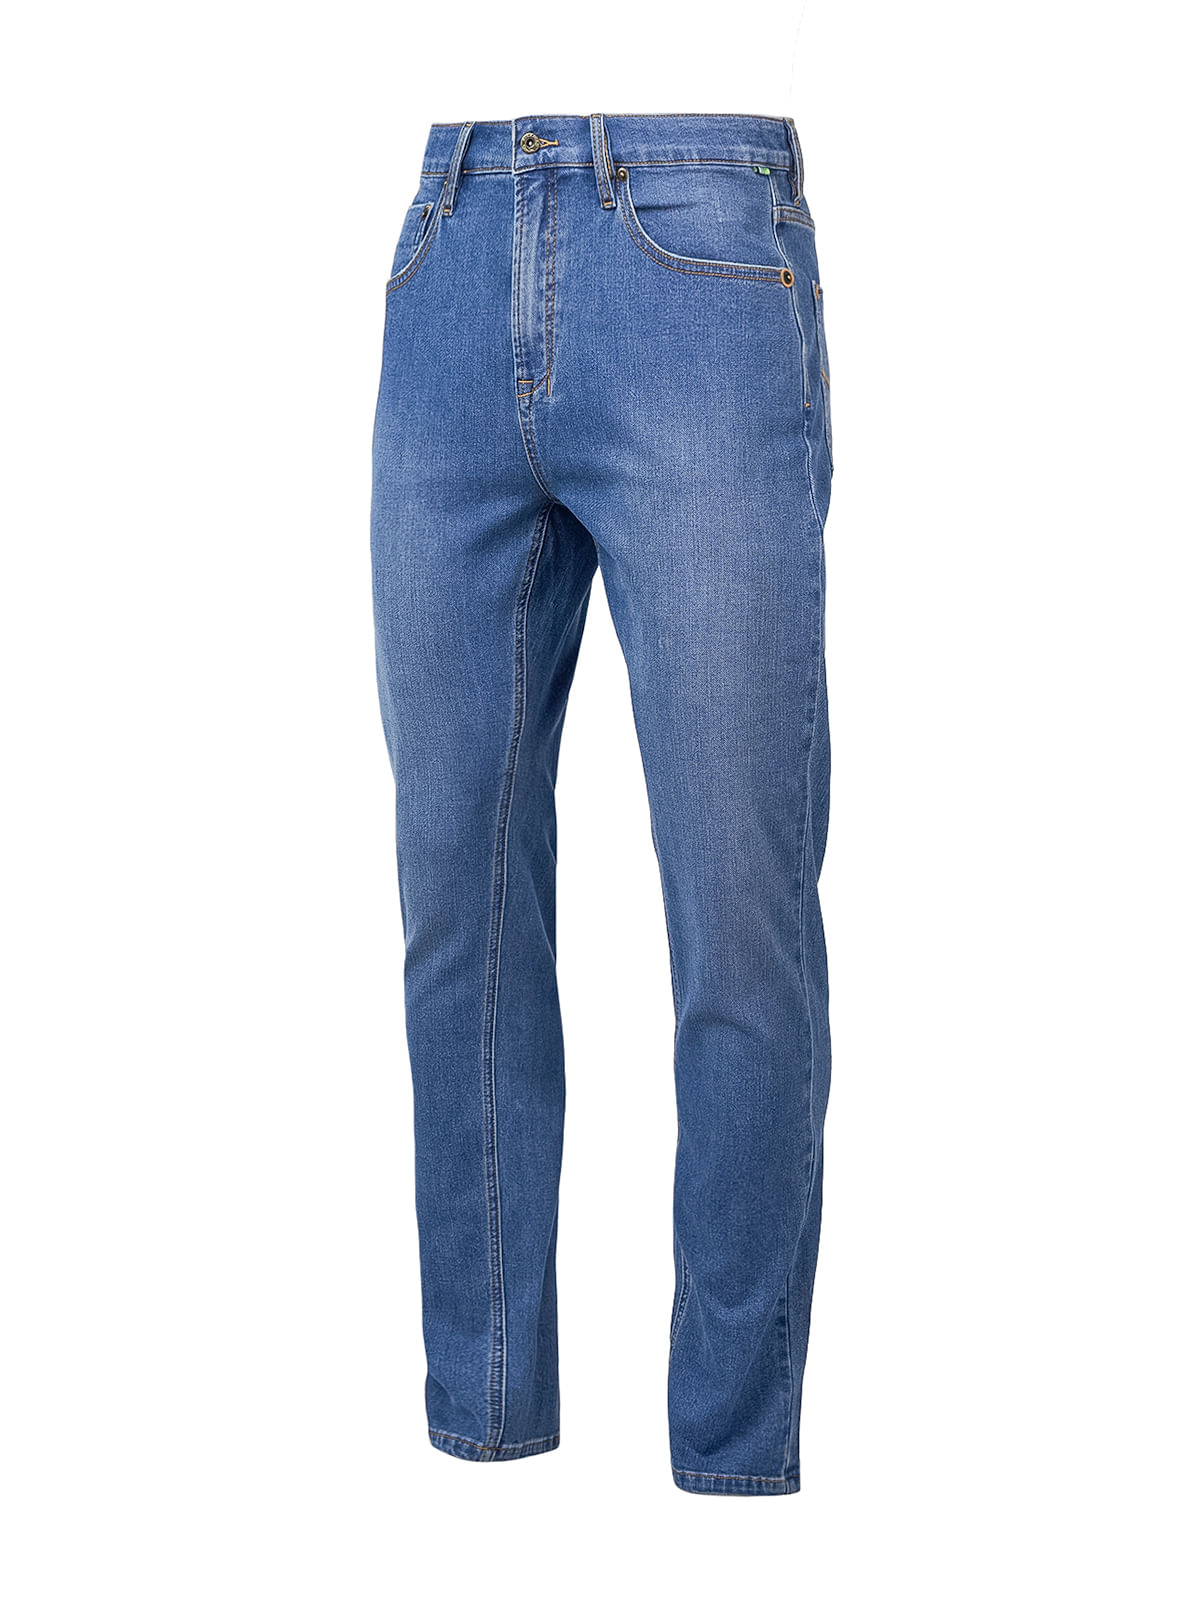 Jeans Natural Flex Hombre Patrick Gris Oscuro Rockford